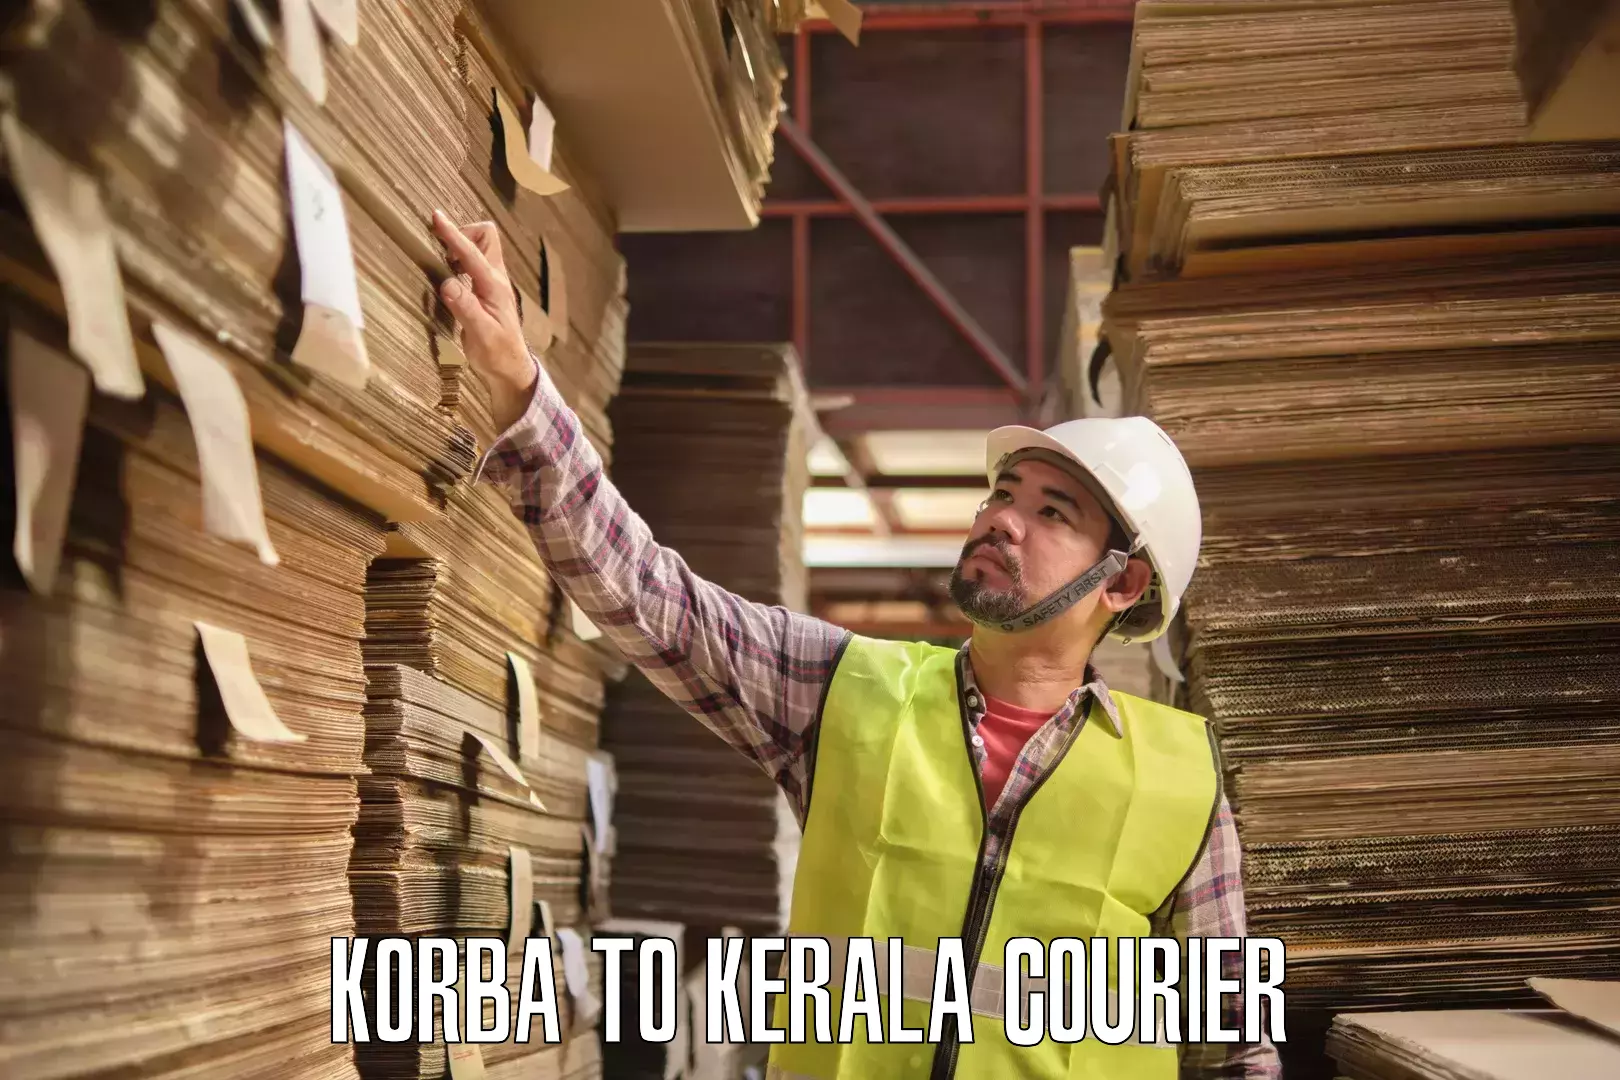 Courier service comparison Korba to Kalpetta